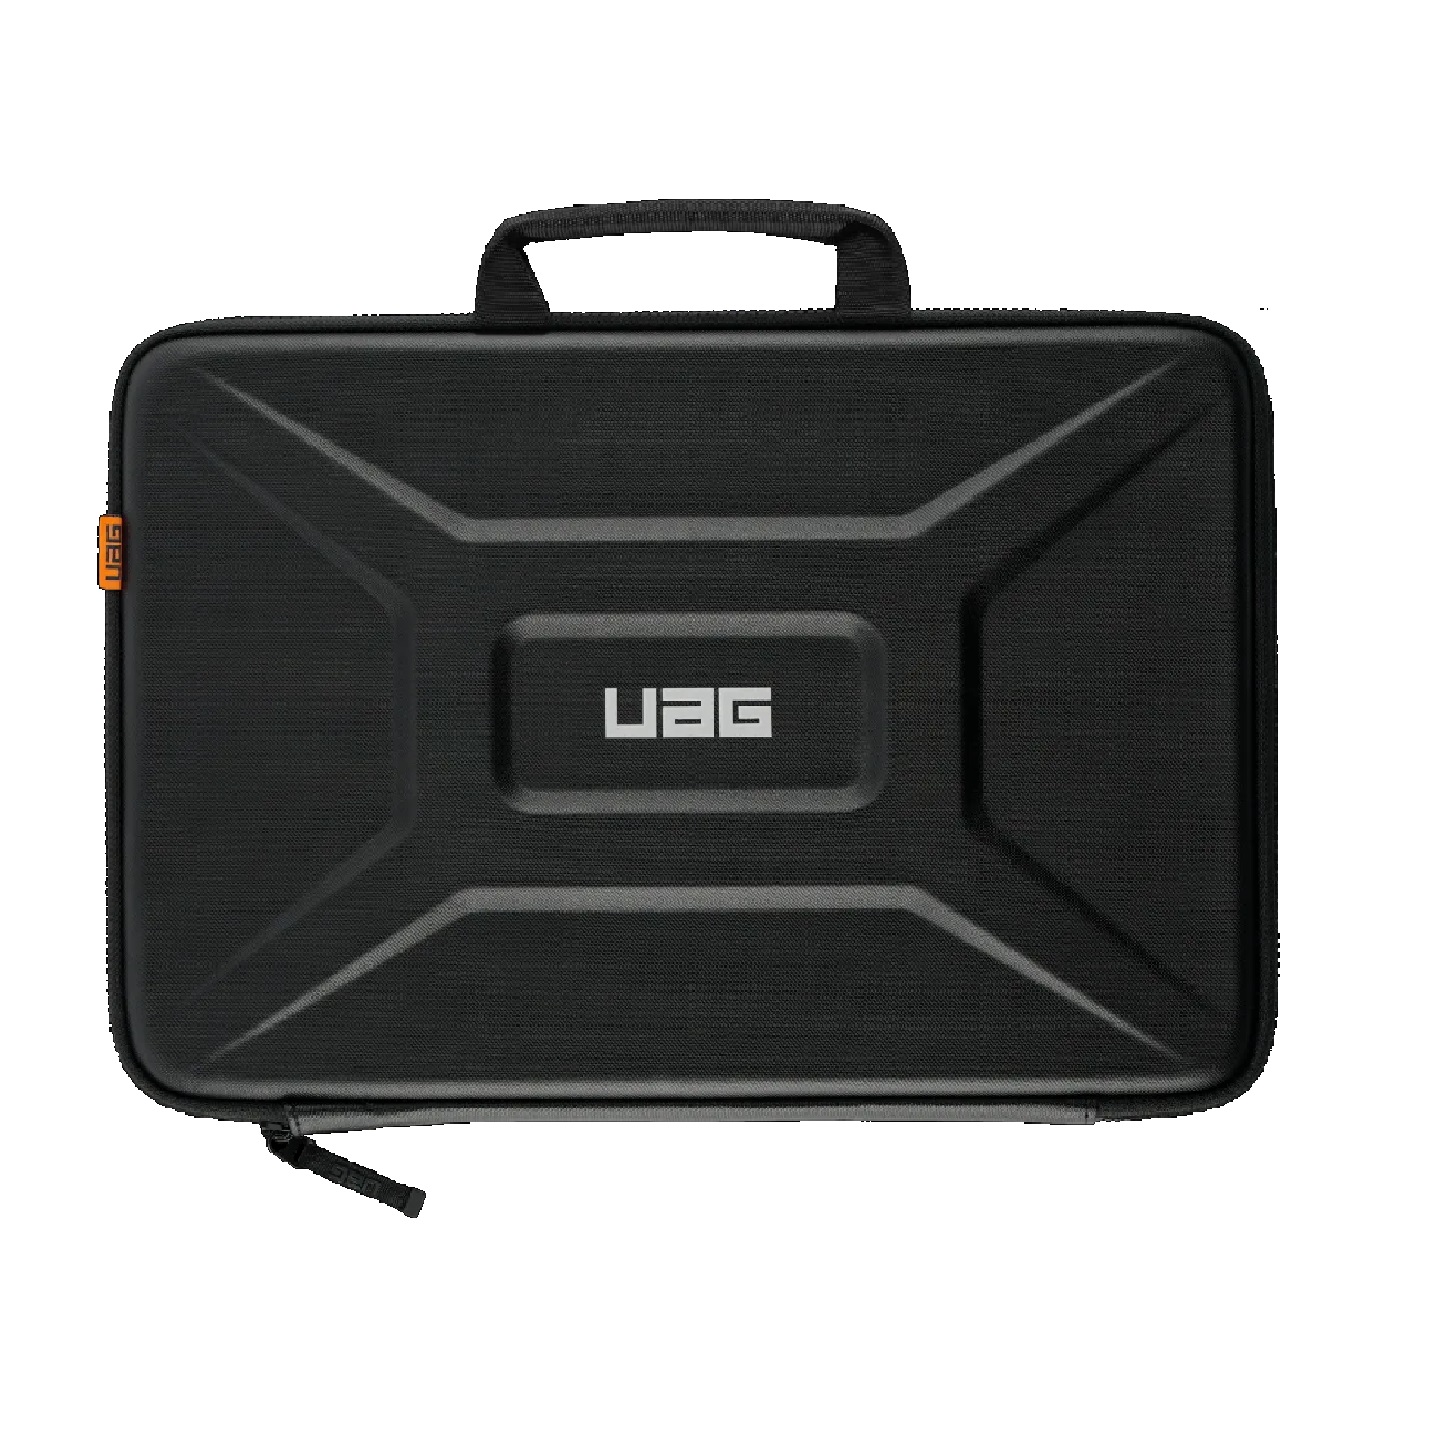 UAG Medium Sleeve with Handle Fits 13″ Laptops/Tablets – Black (982800114040), DROP+ Military Standard, Tactical Grip, Wear-Resistant,Mesh Pocket